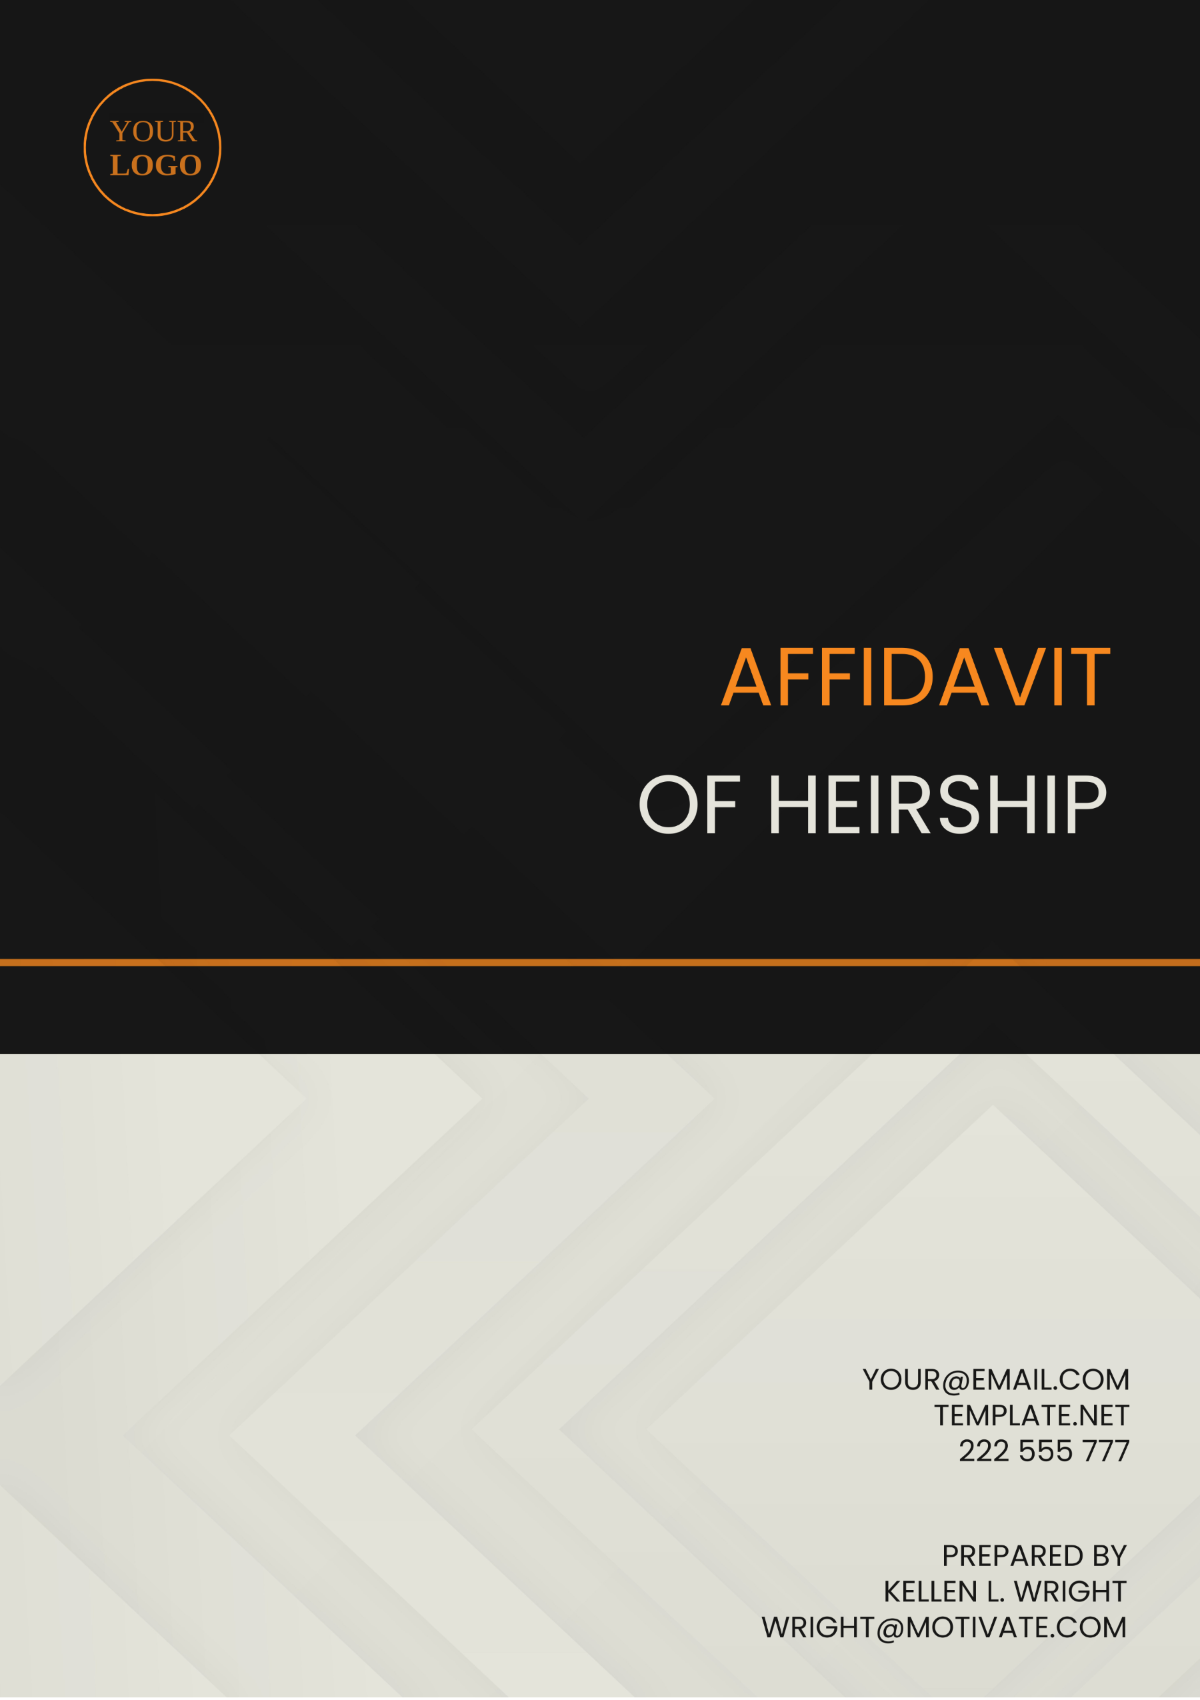 Affidavit of Heirship Template